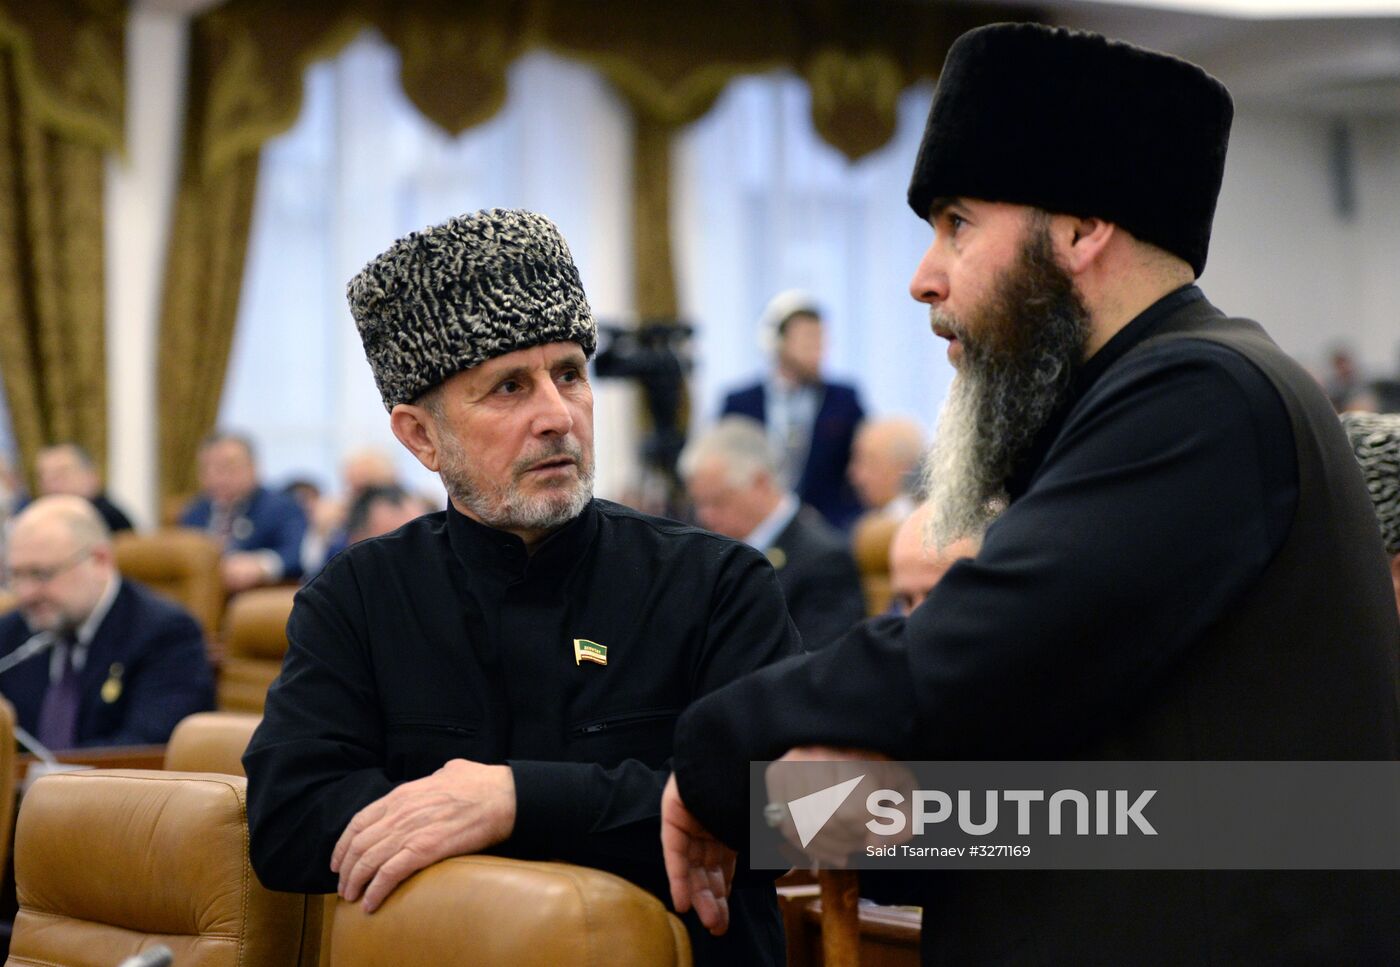 Chechen Republic celebrates anniversary of statehood reconstruction